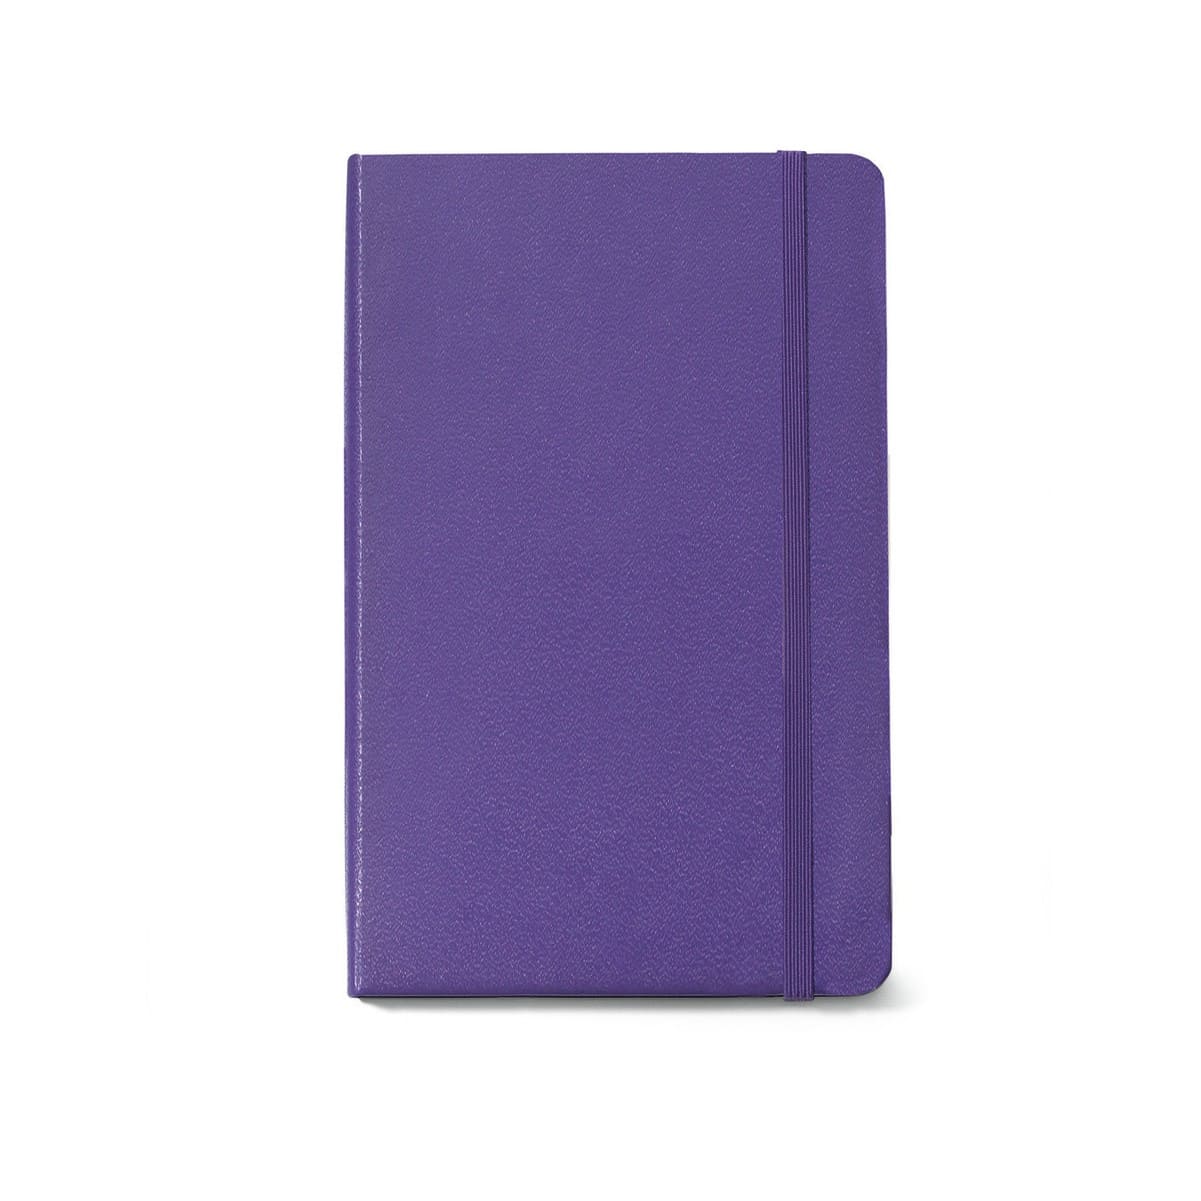 Hard Cover Large Ruled Notebook - Brilliant Violet